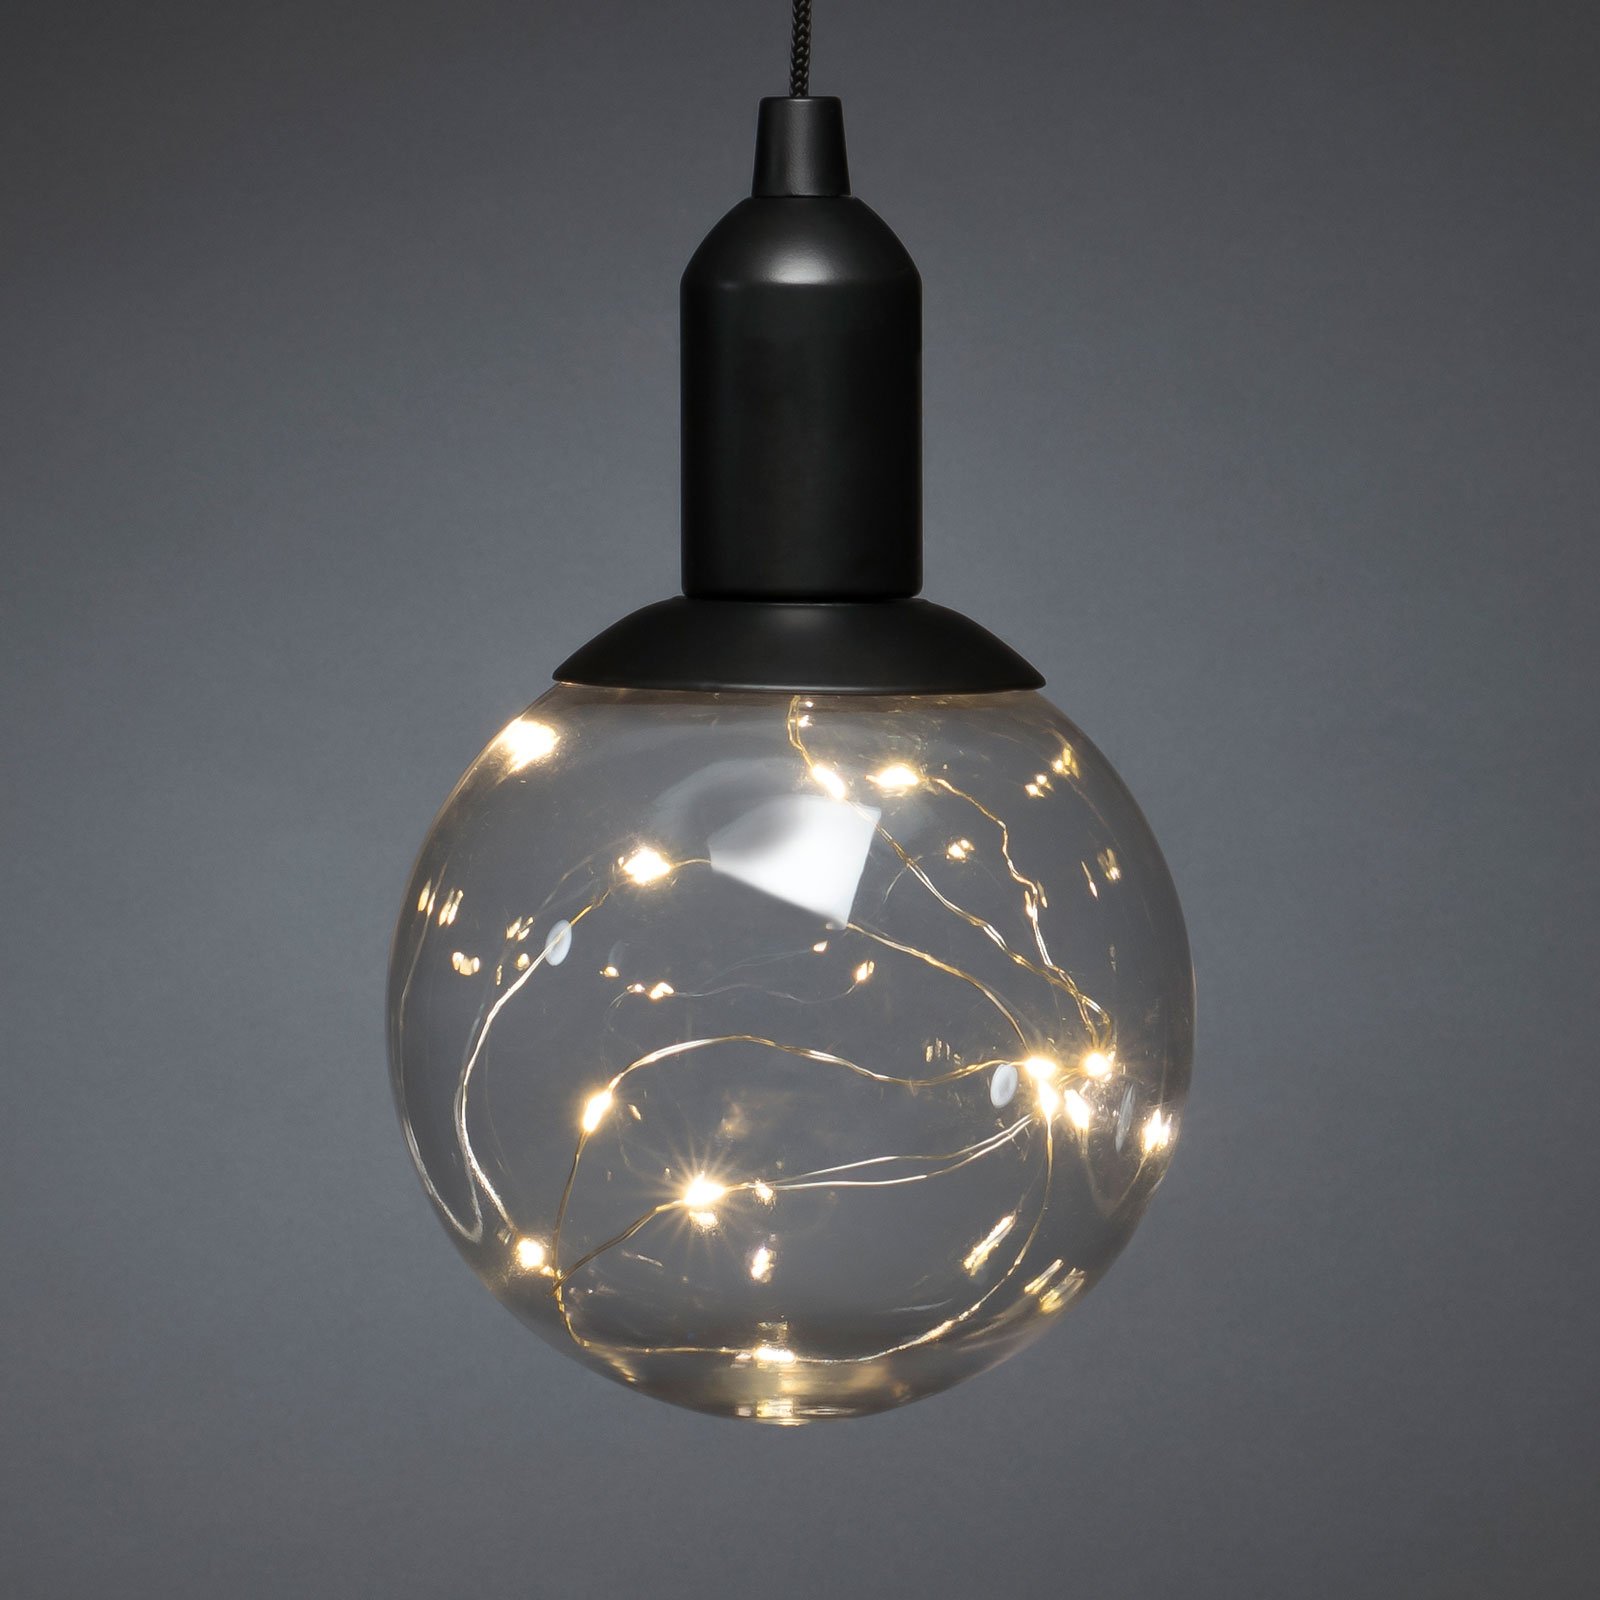 LED Kugel Design Tisch Lampe klar Ess Zimmer Beleuchtung Batterie Deko Leuchte 